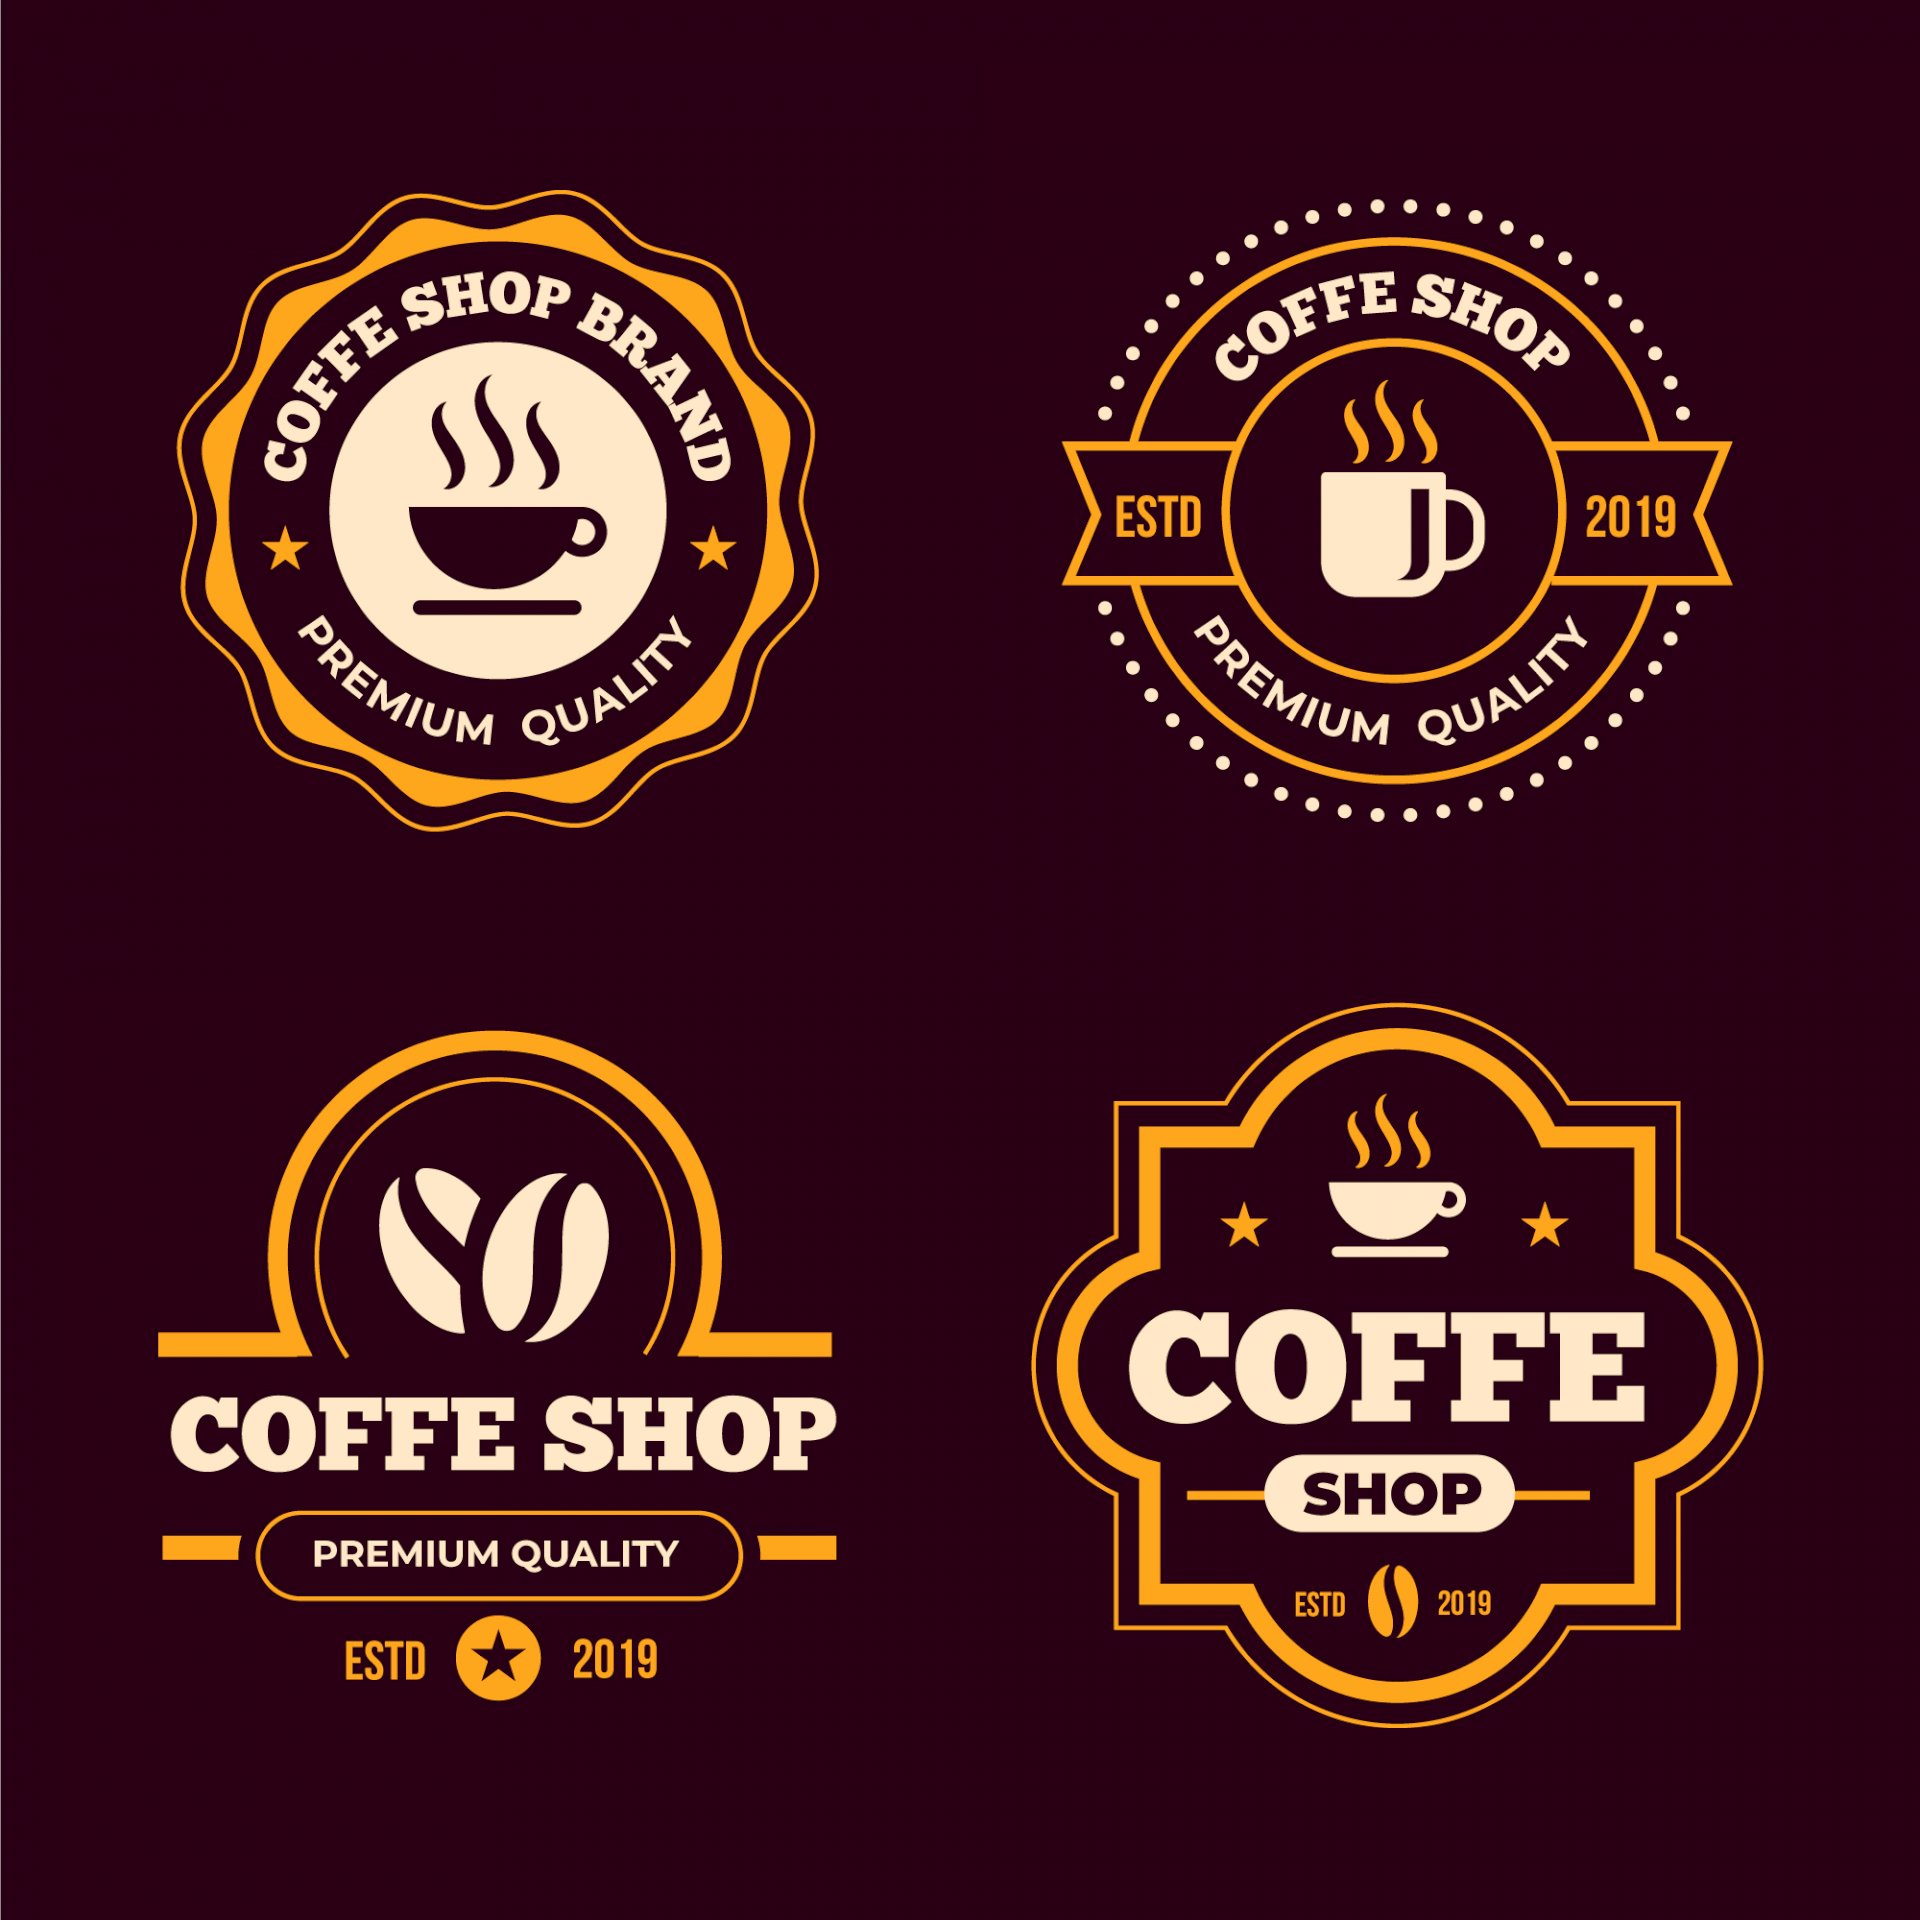 Tải 100+ mẫu logo cafe đẹp độc đáo file vector AI, EPS, JPEG, SVG